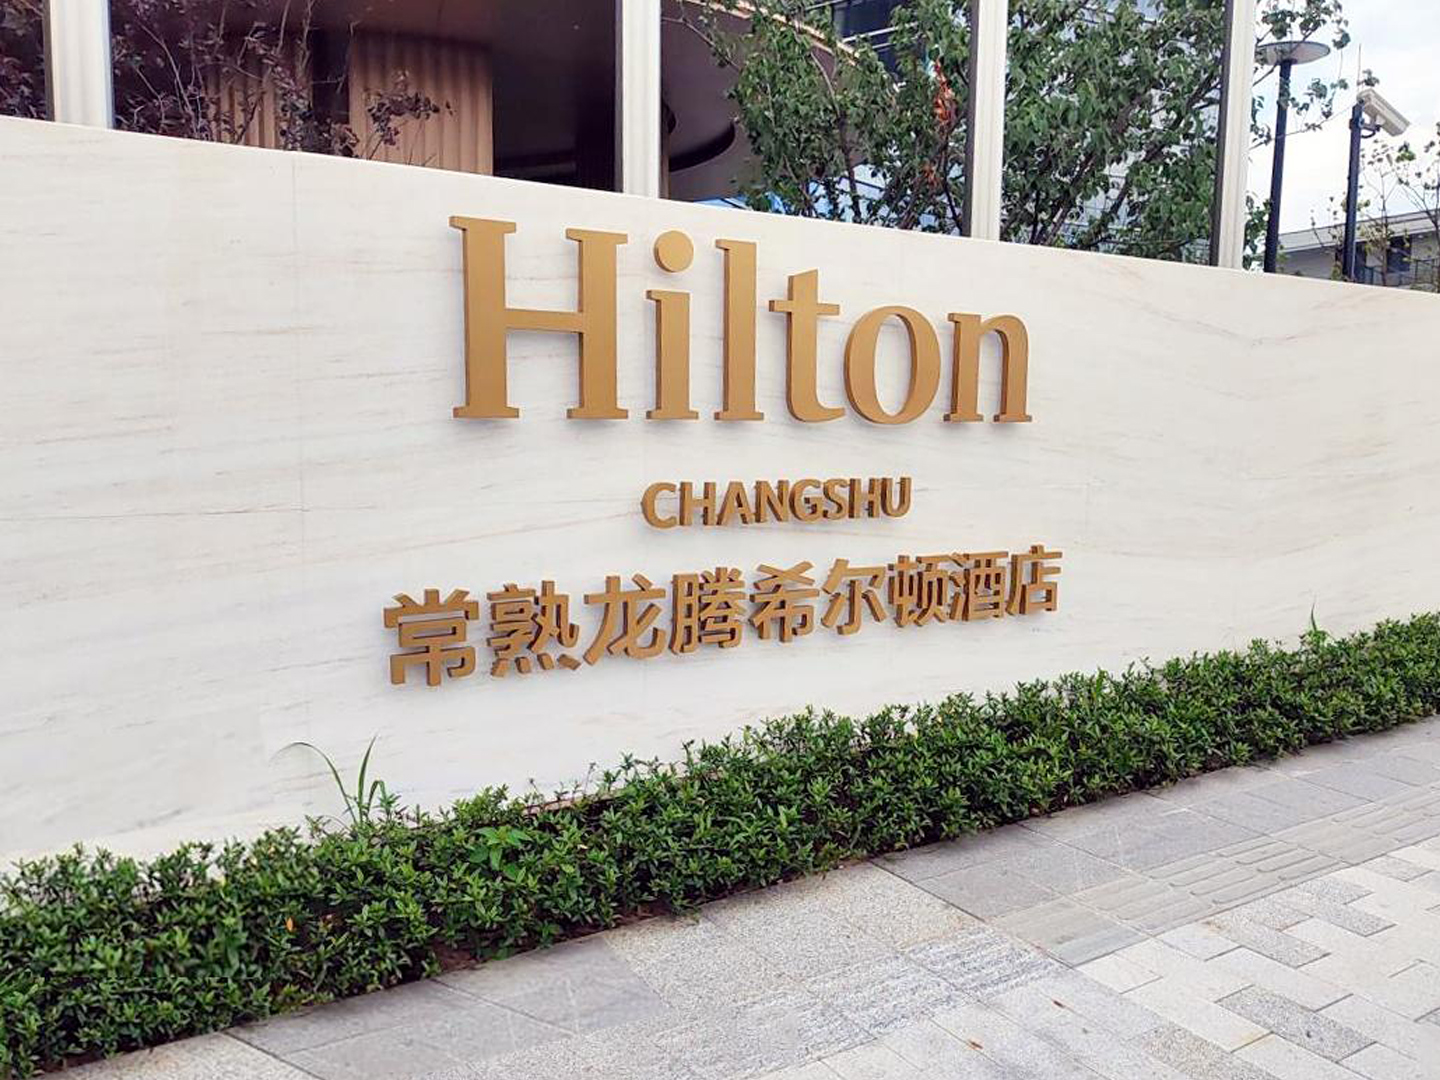 DOOR Promotes Hilton Hotel Green Upgrade